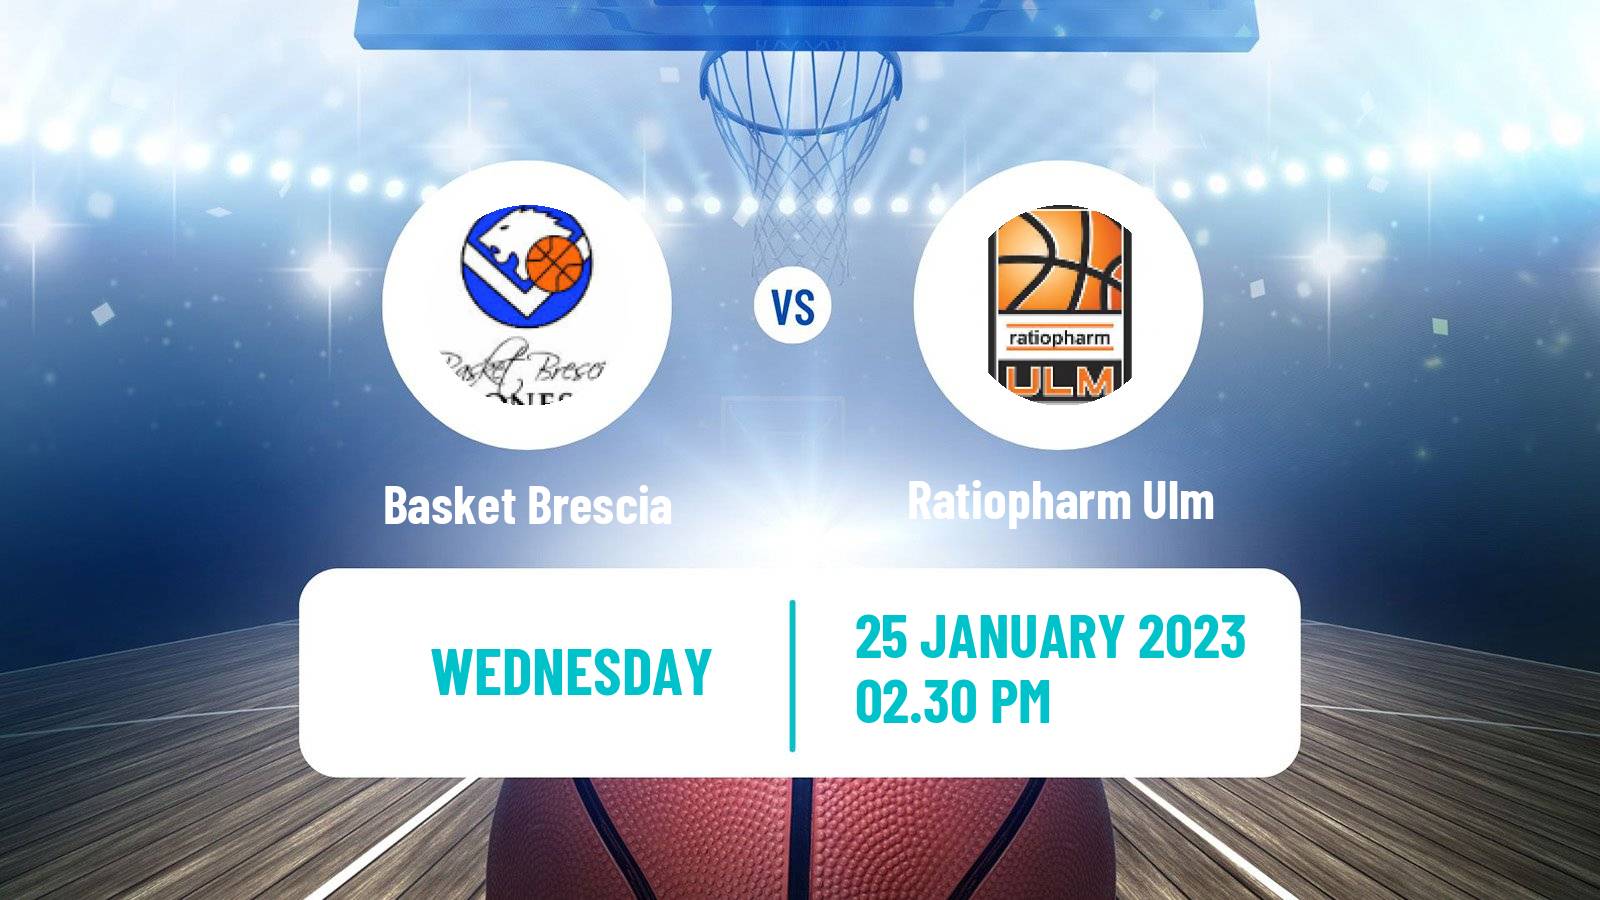 Basketball Eurocup Basket Brescia - Ratiopharm Ulm